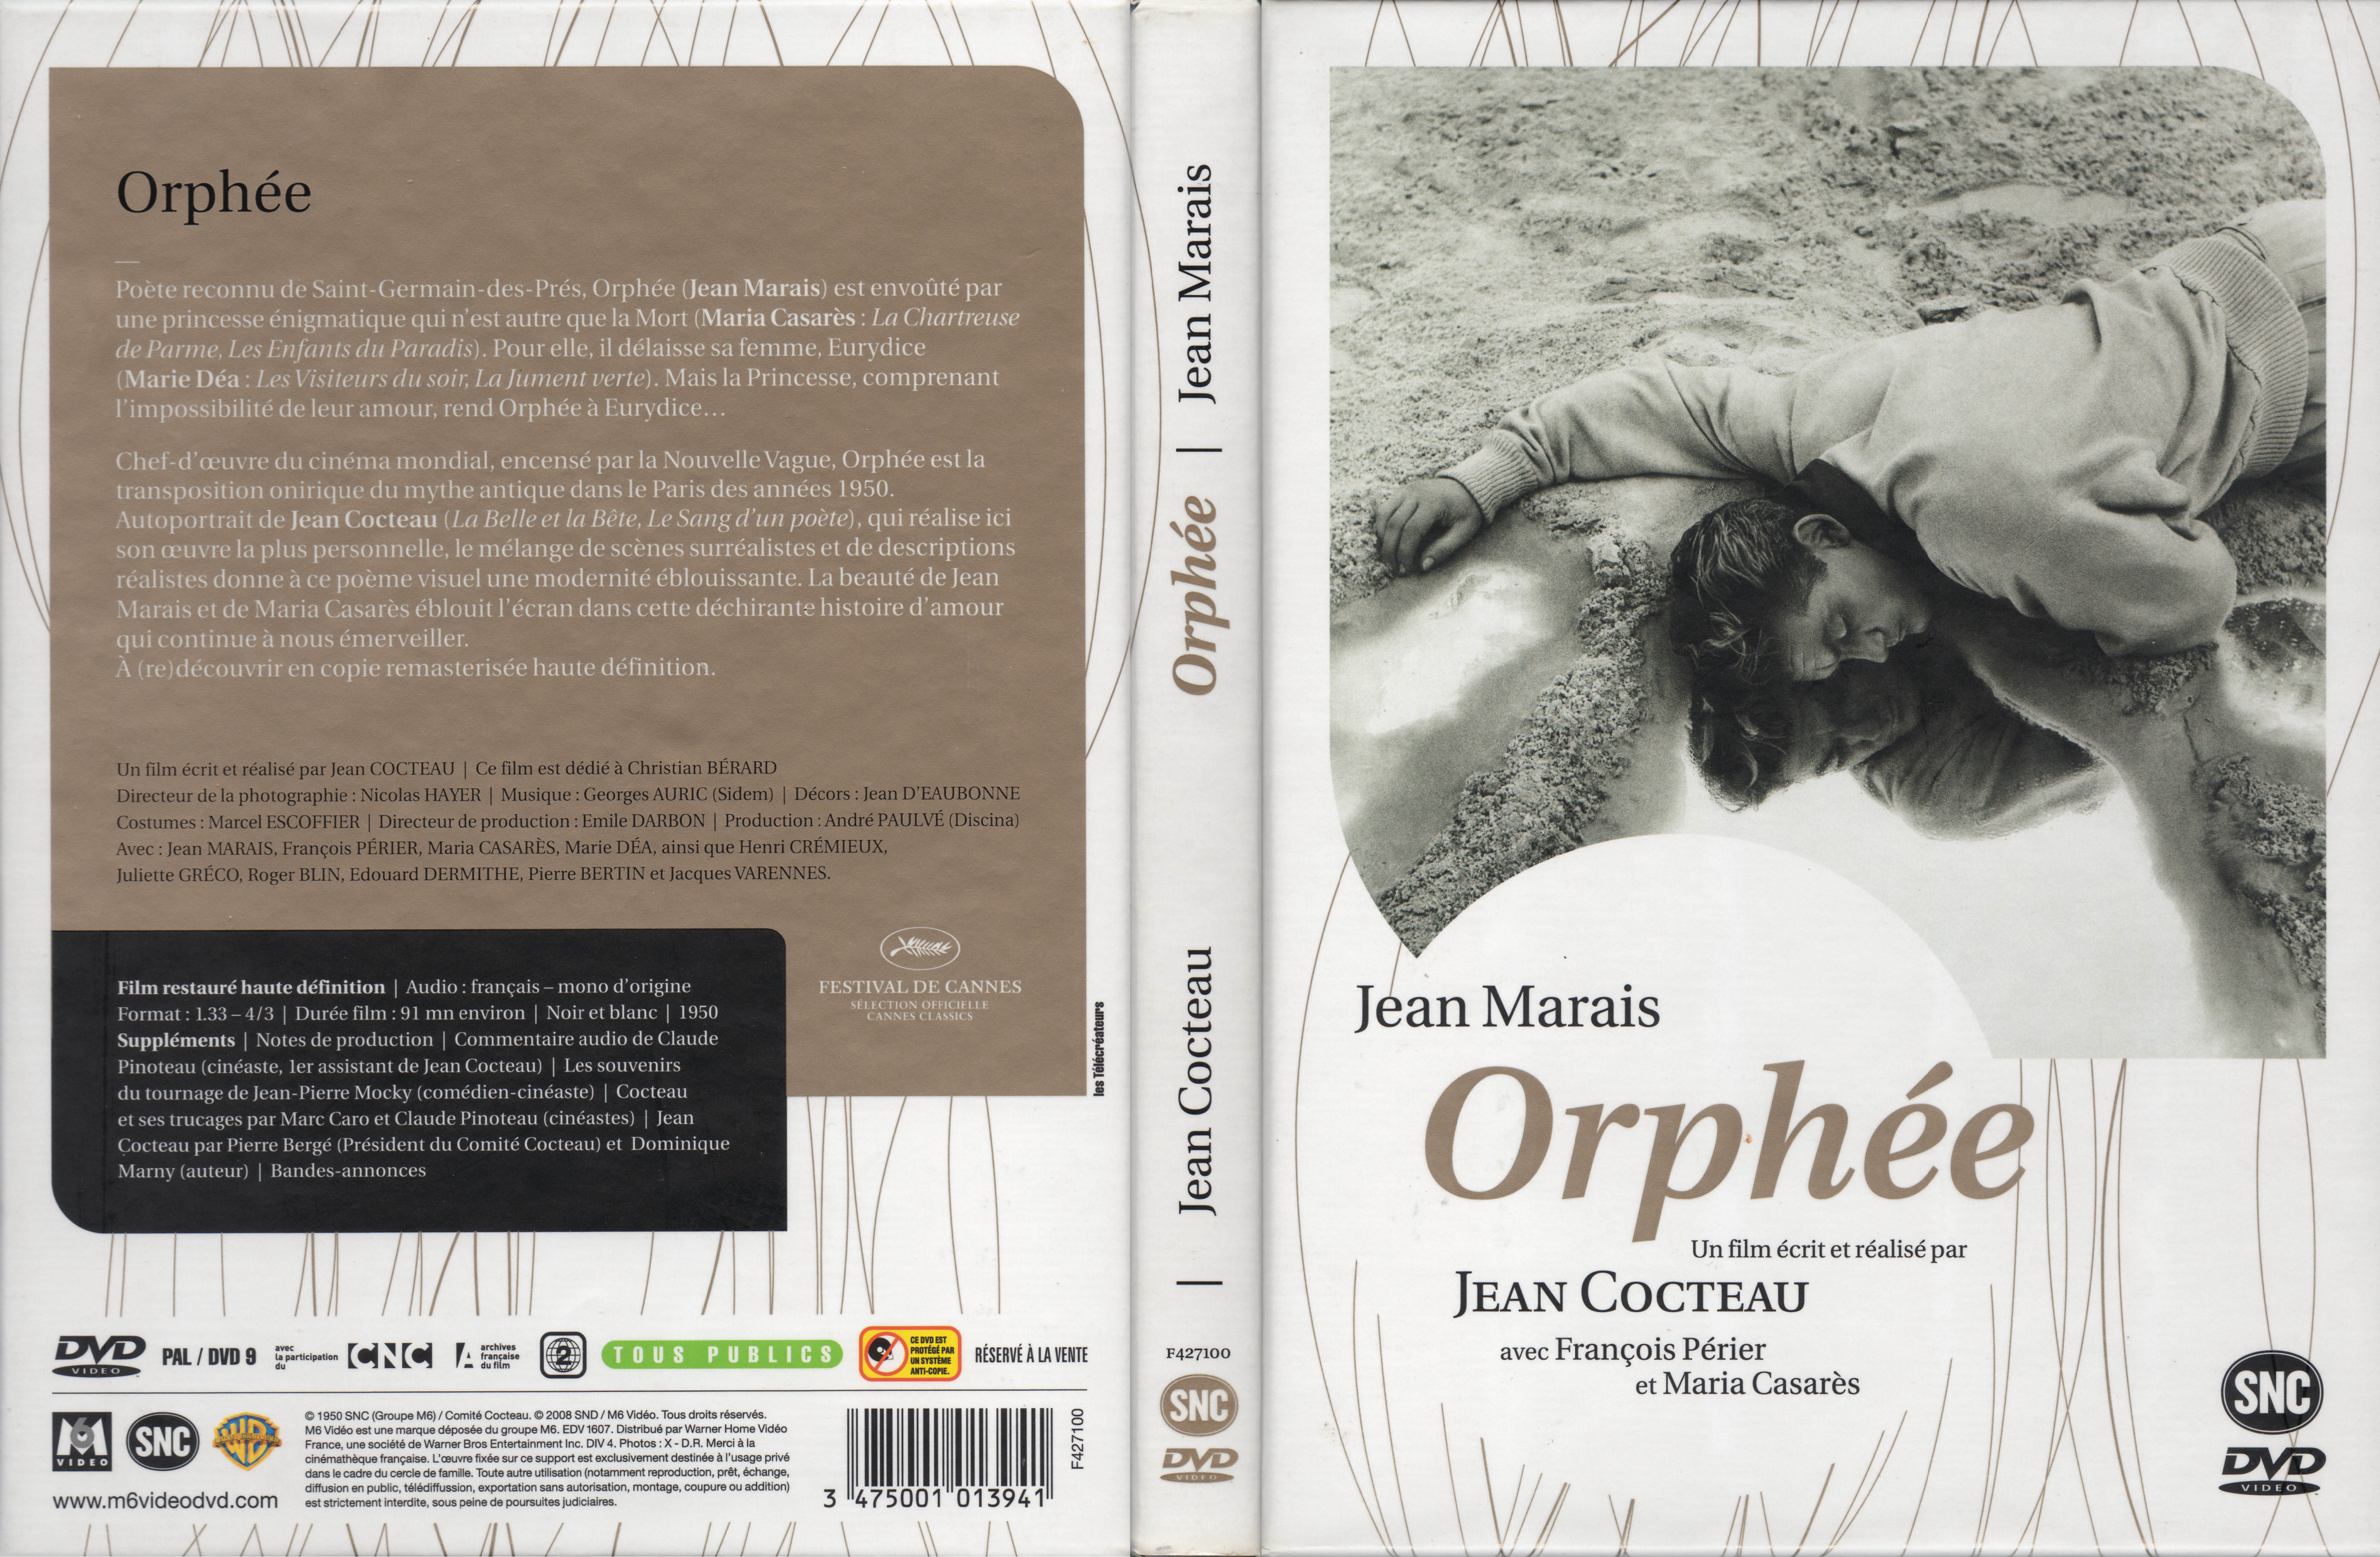 Jaquette DVD Orphe v2